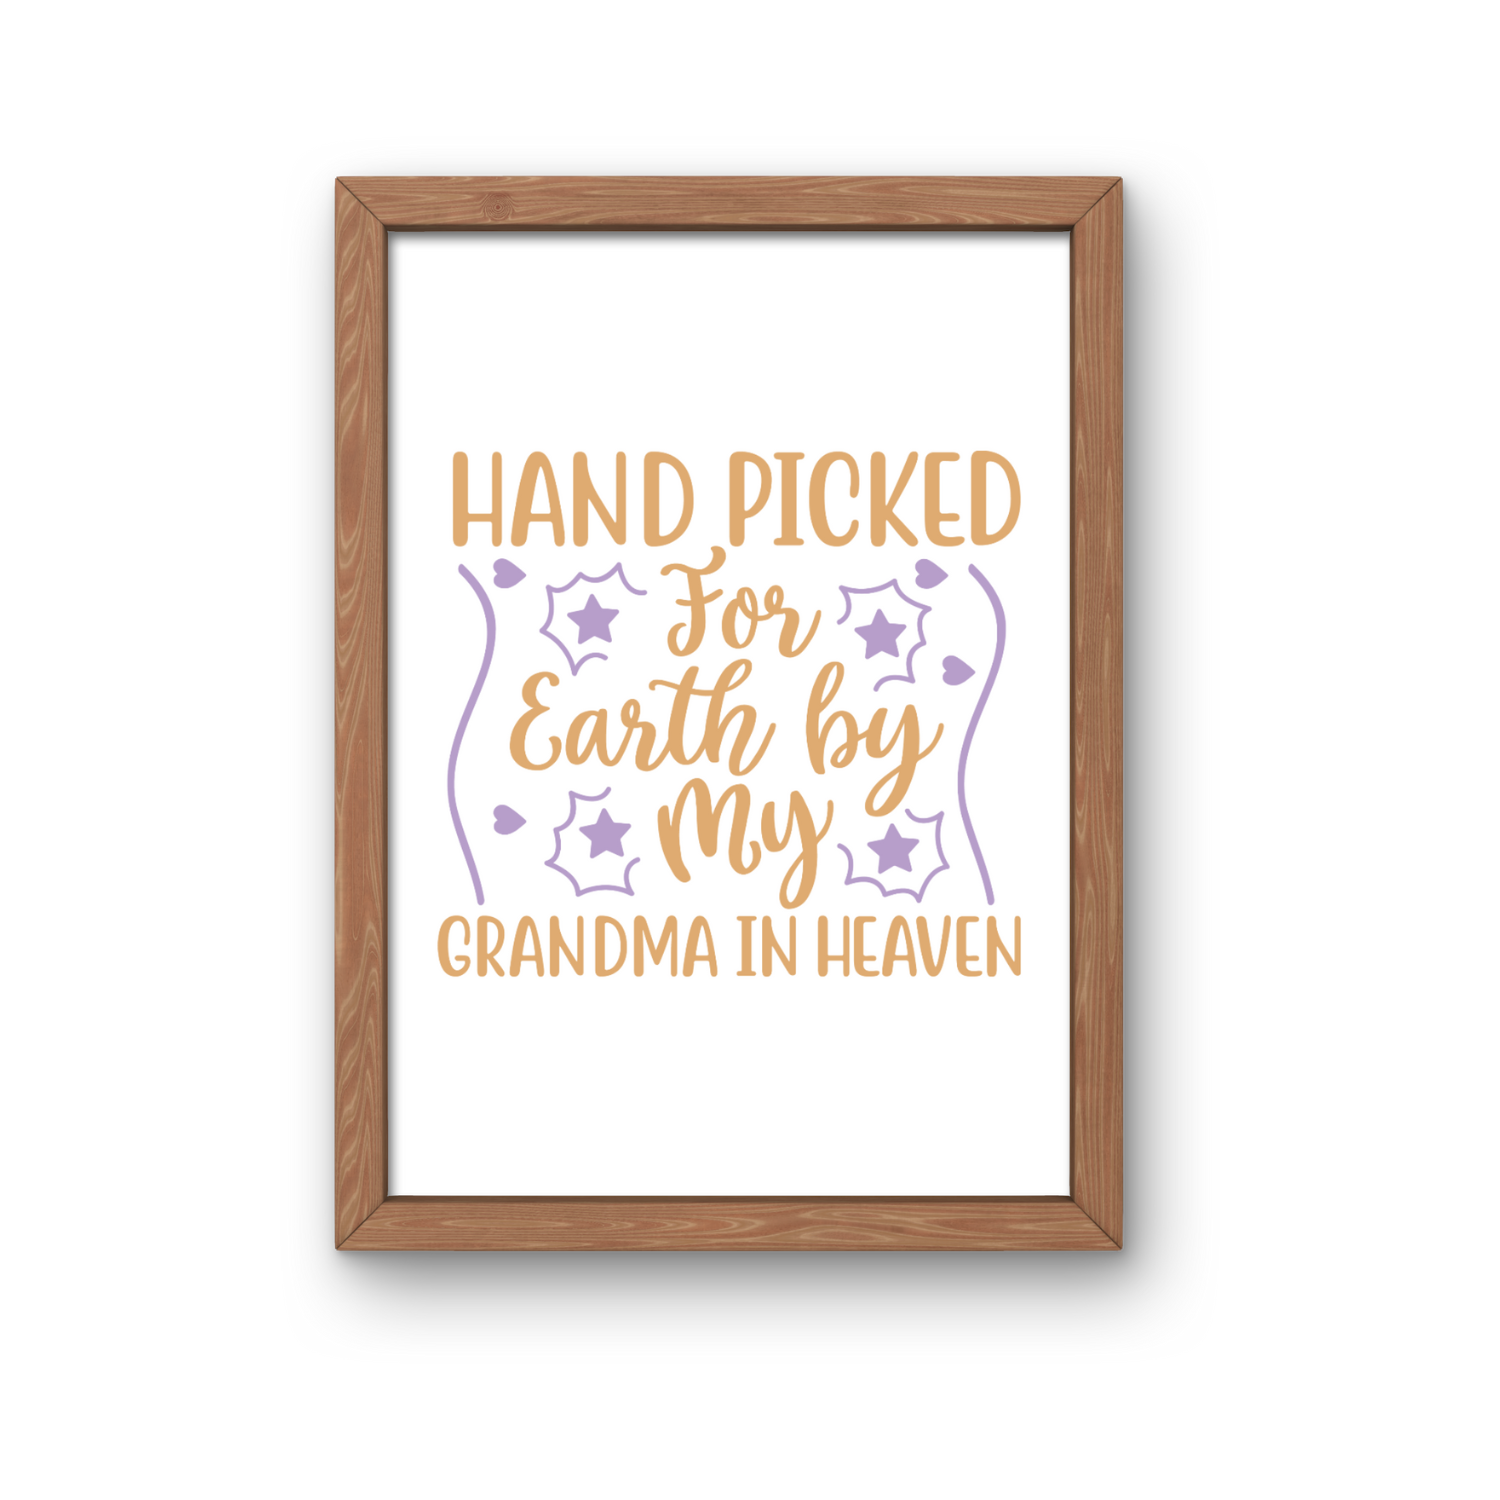 Hand picked by Grandma SVG | Digital Download | Cut File | SVG